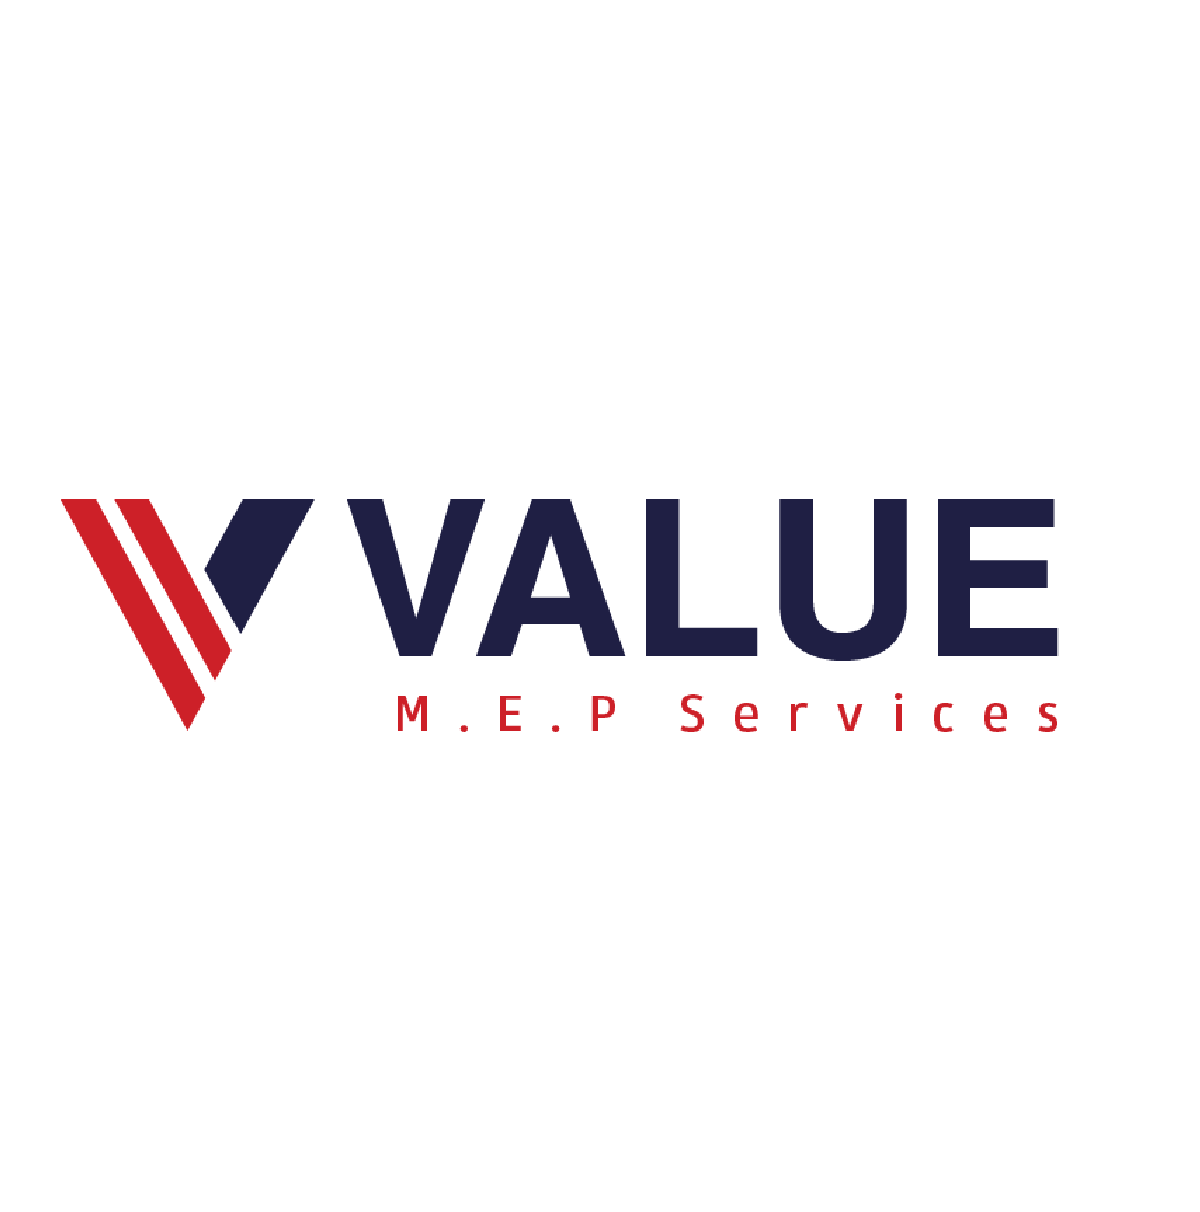 VALUE M.E.P Services